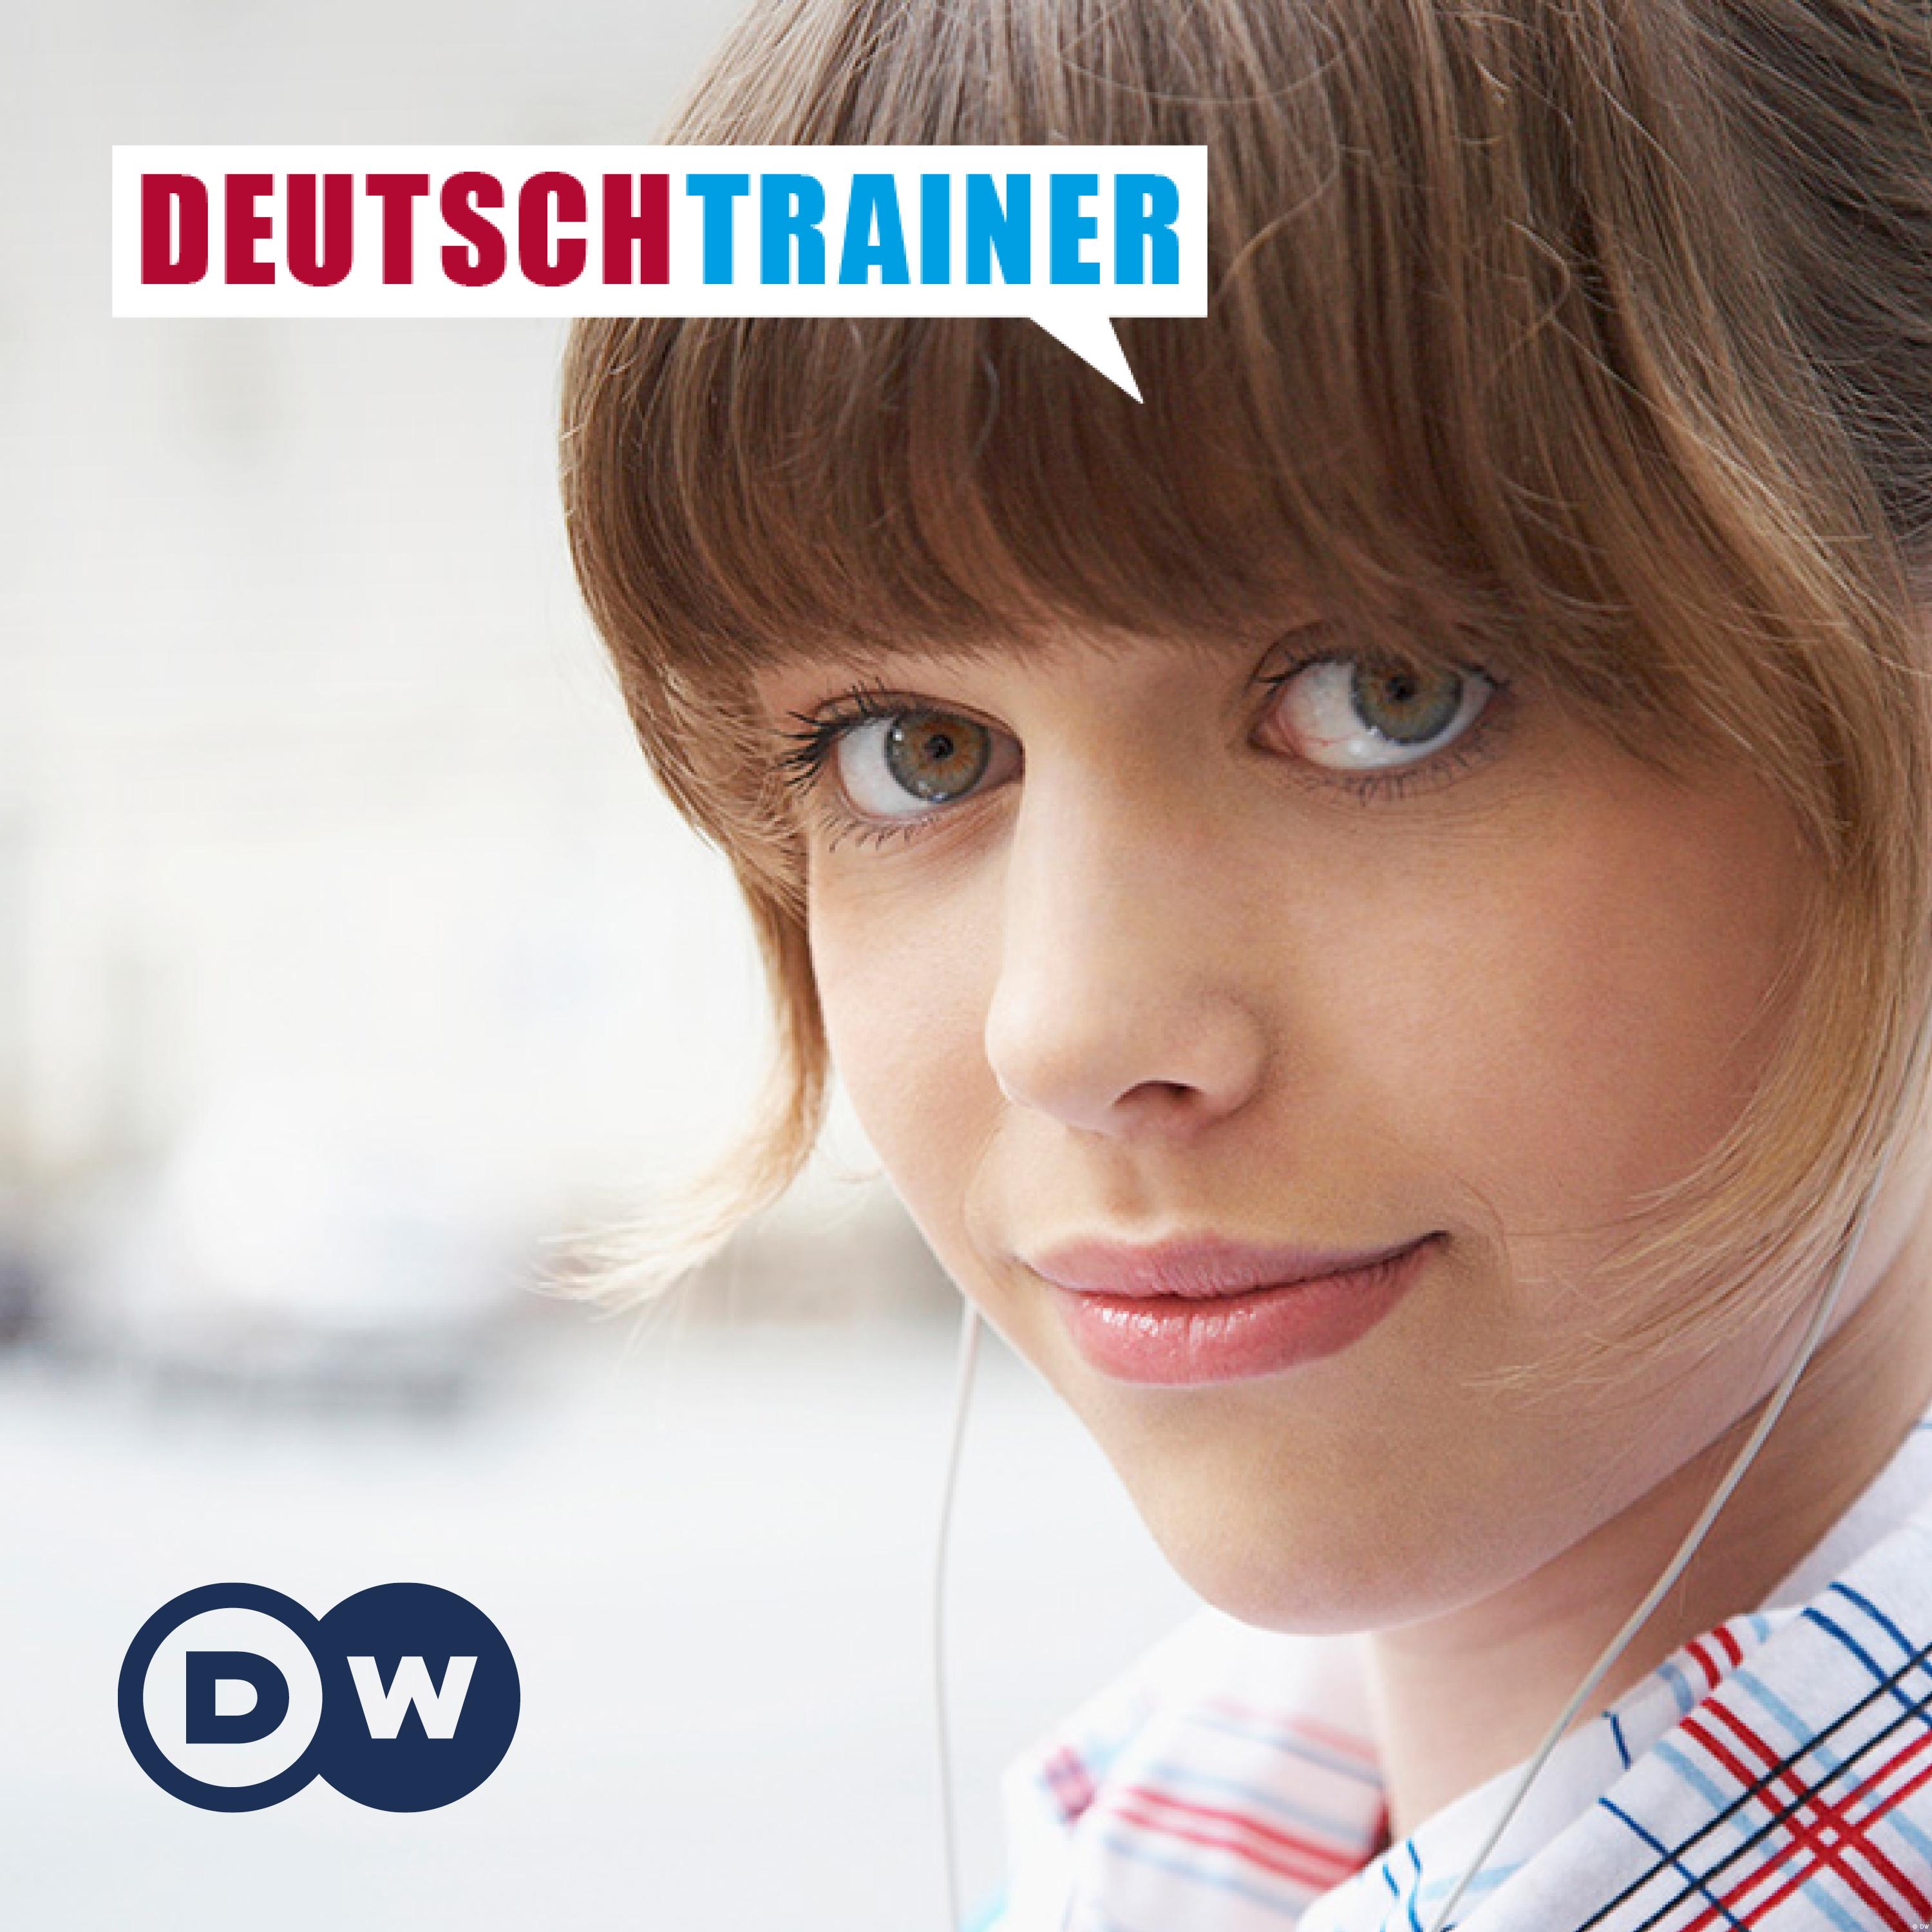 Deutschtrainer | تعلم الألمانية بواسطة الملفات الصوتية